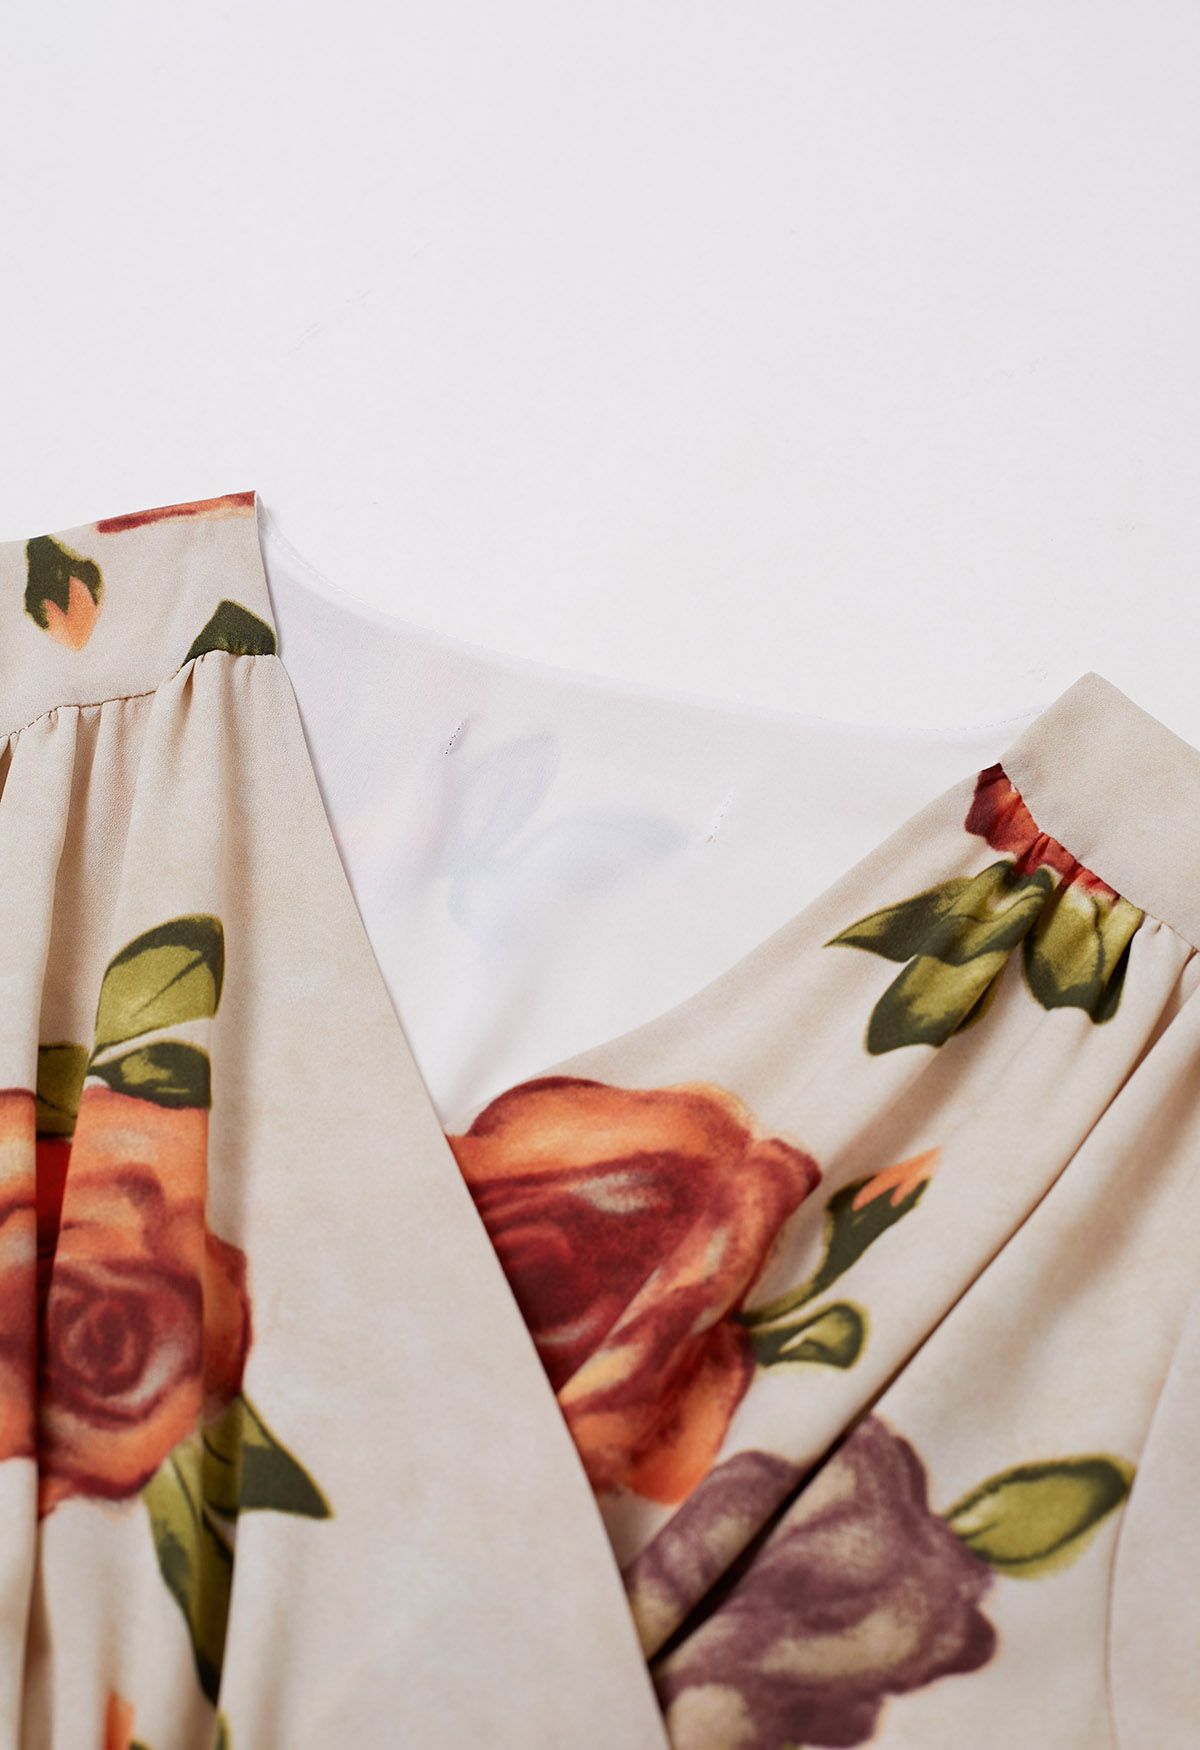 Vintage Rose Print Wrap Midi Dress